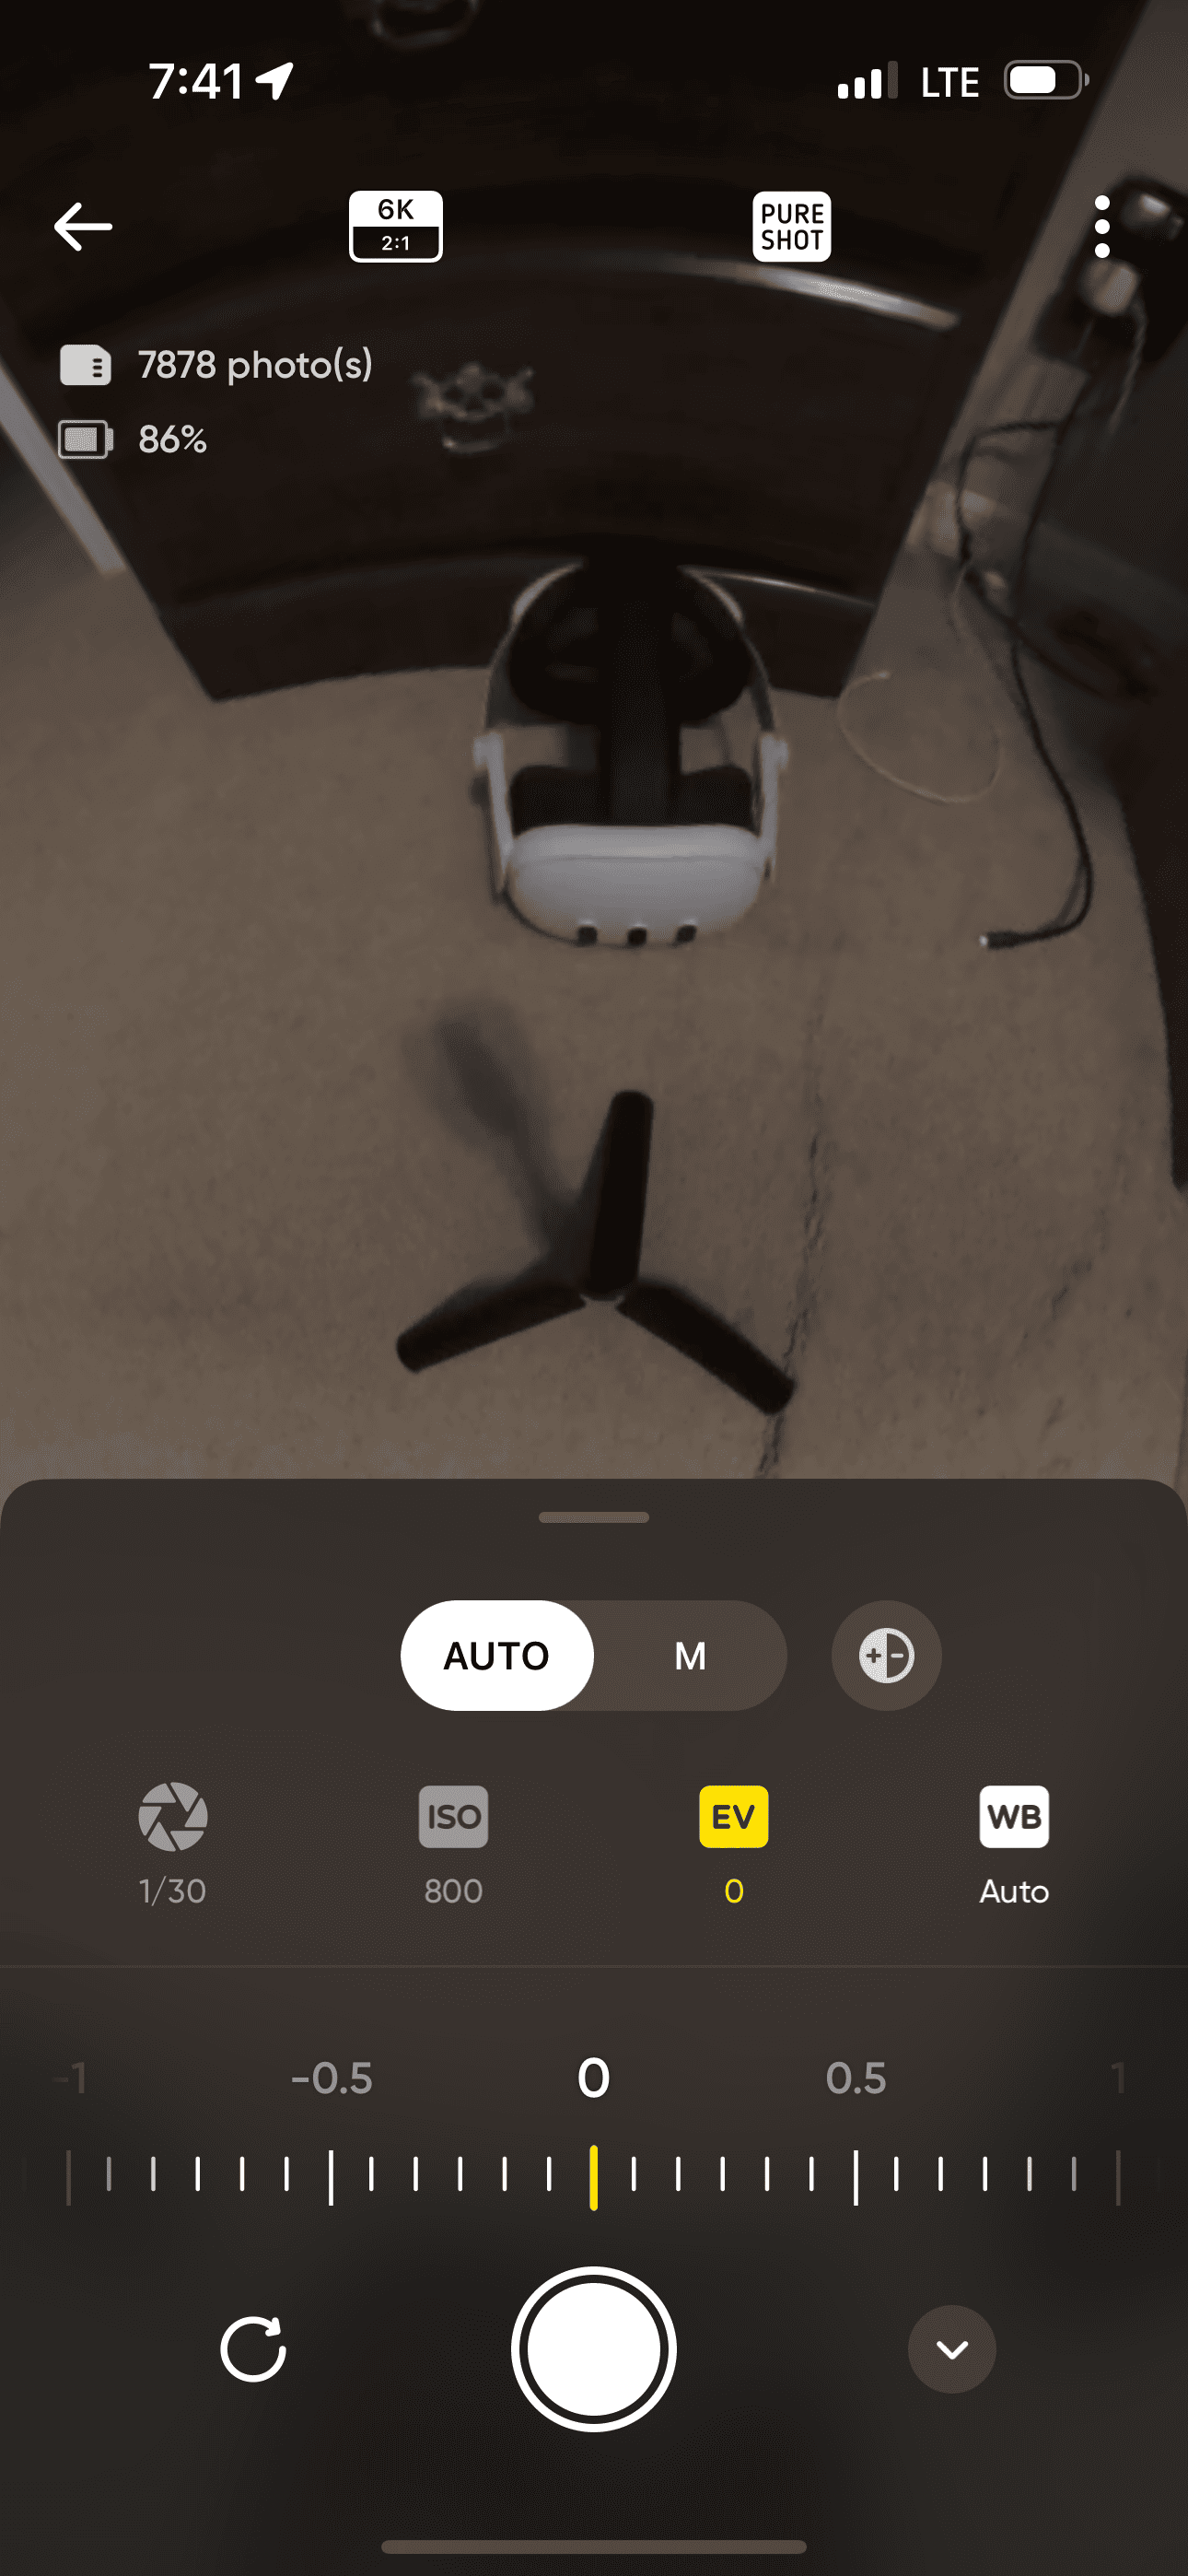 camera button settings insta360 app for controlling camera